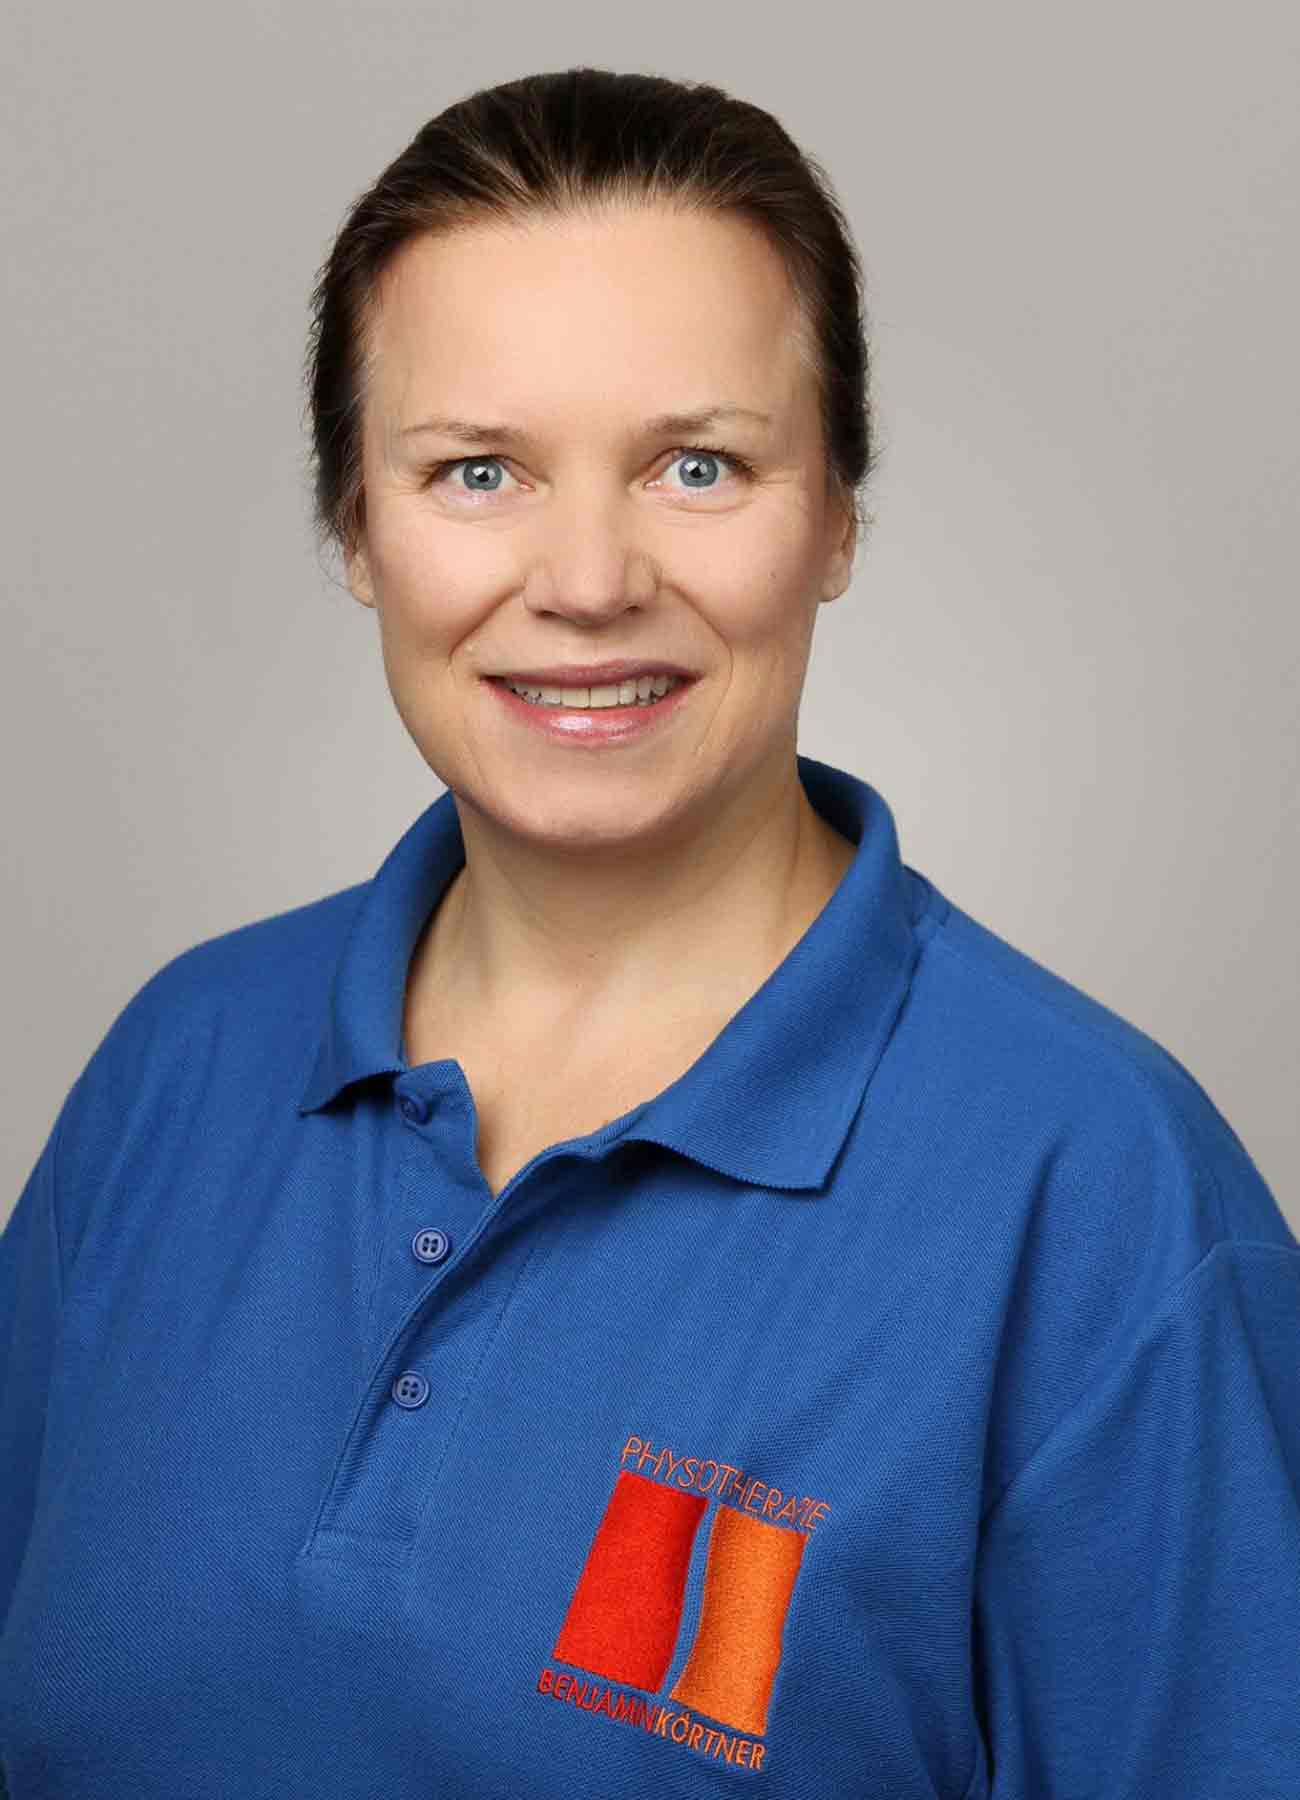 Ute Meyer-Haussner - Physiotherapist